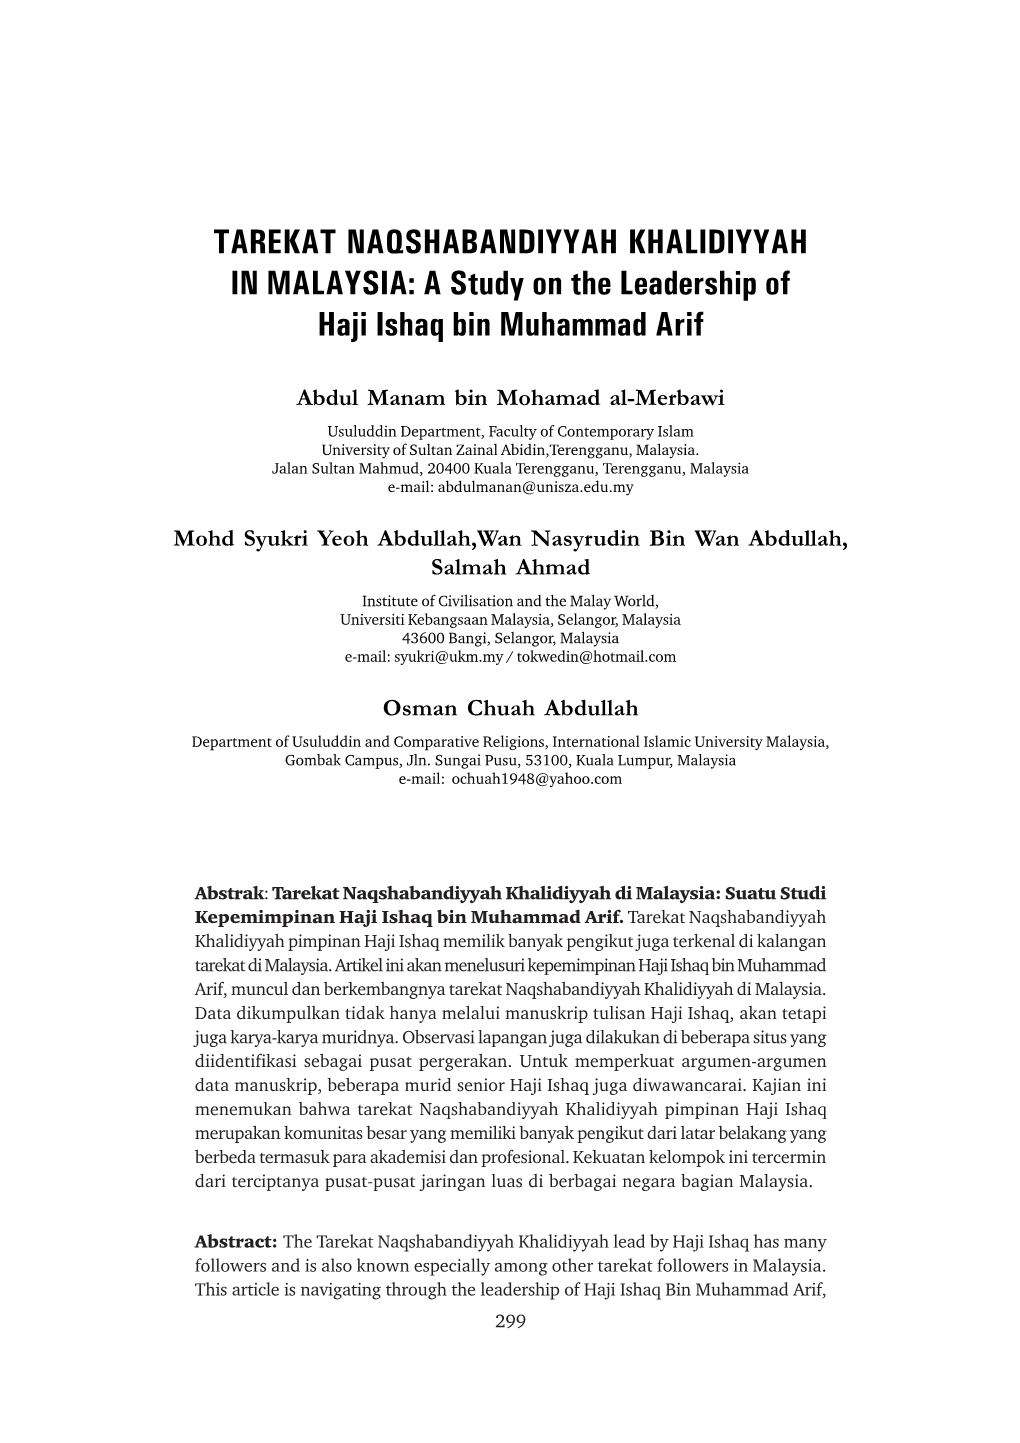 TAREKAT NAQSHABANDIYYAH KHALIDIYYAH in MALAYSIA: a Study on the Leadership of Haji Ishaq Bin Muhammad Arif